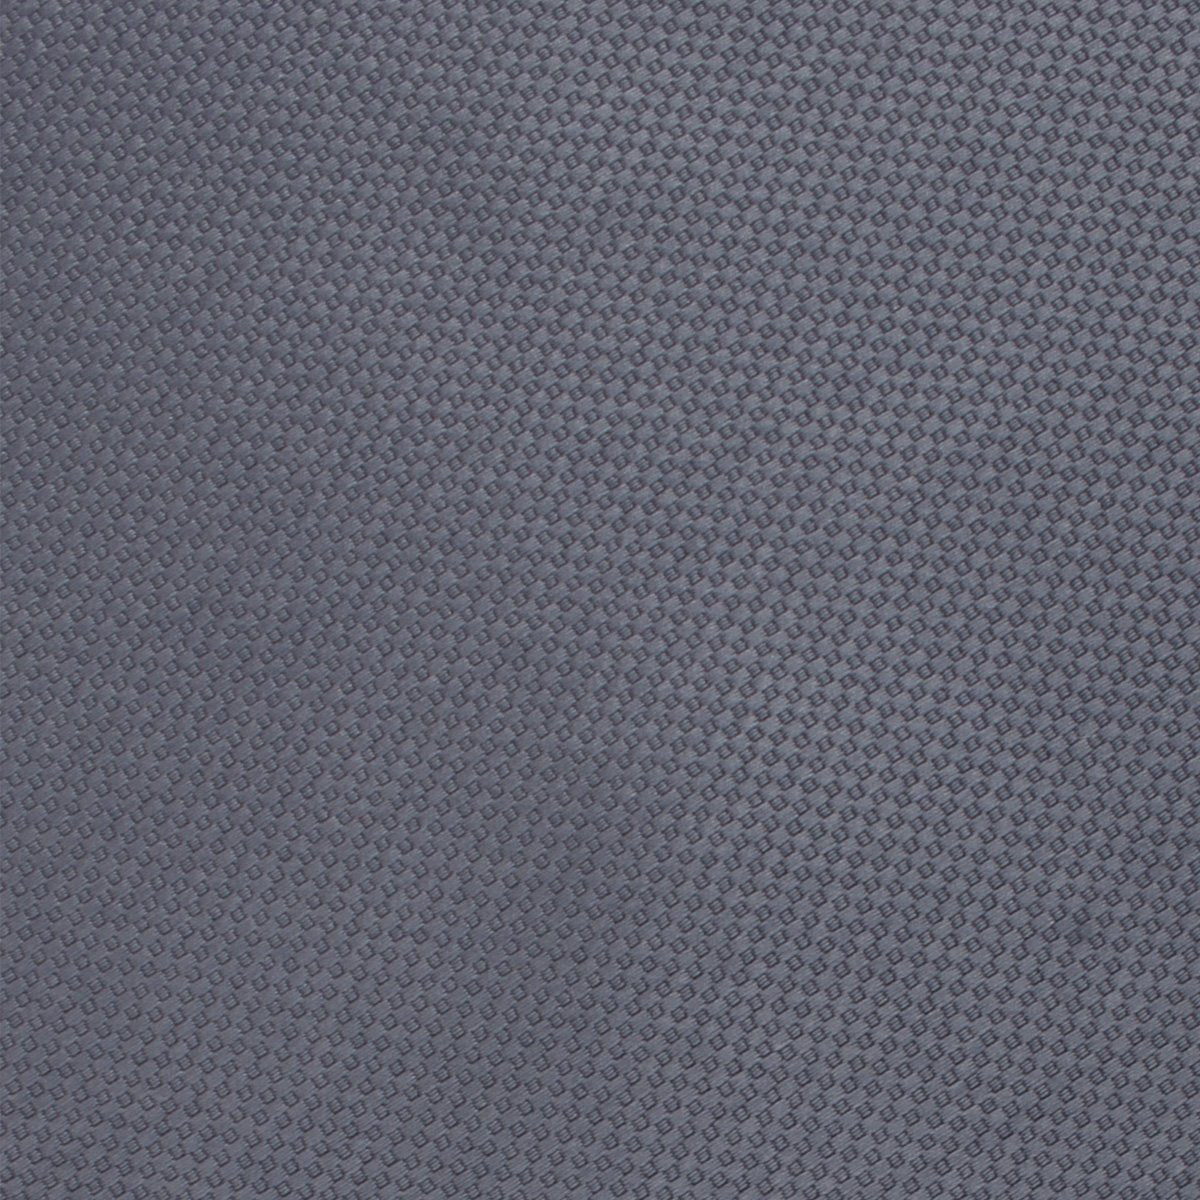 Slate Grey Charcoal Basket Weave Fabric Swatch